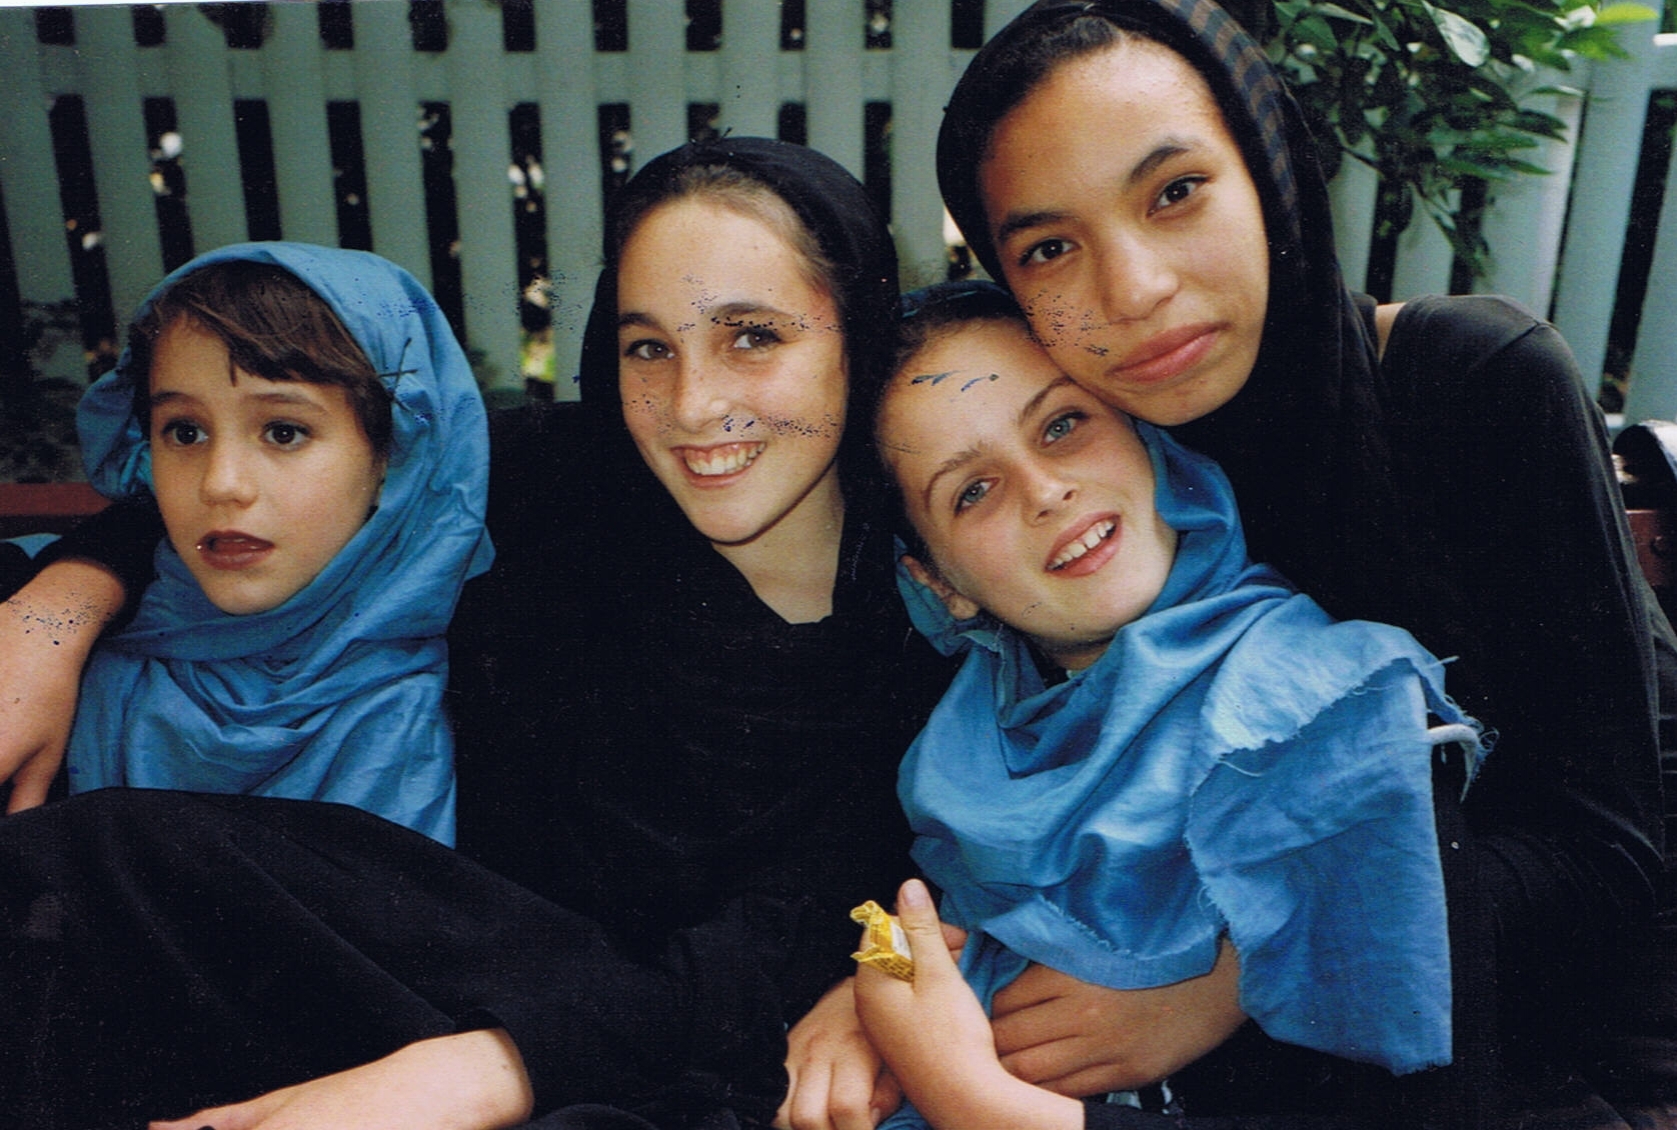 Moraya as Caravan Kid. Alumni Dancers (Left to right): Gabriela O'Shea, Isabel Cottingham, Eliza Alden, and Moraya Seeger. 